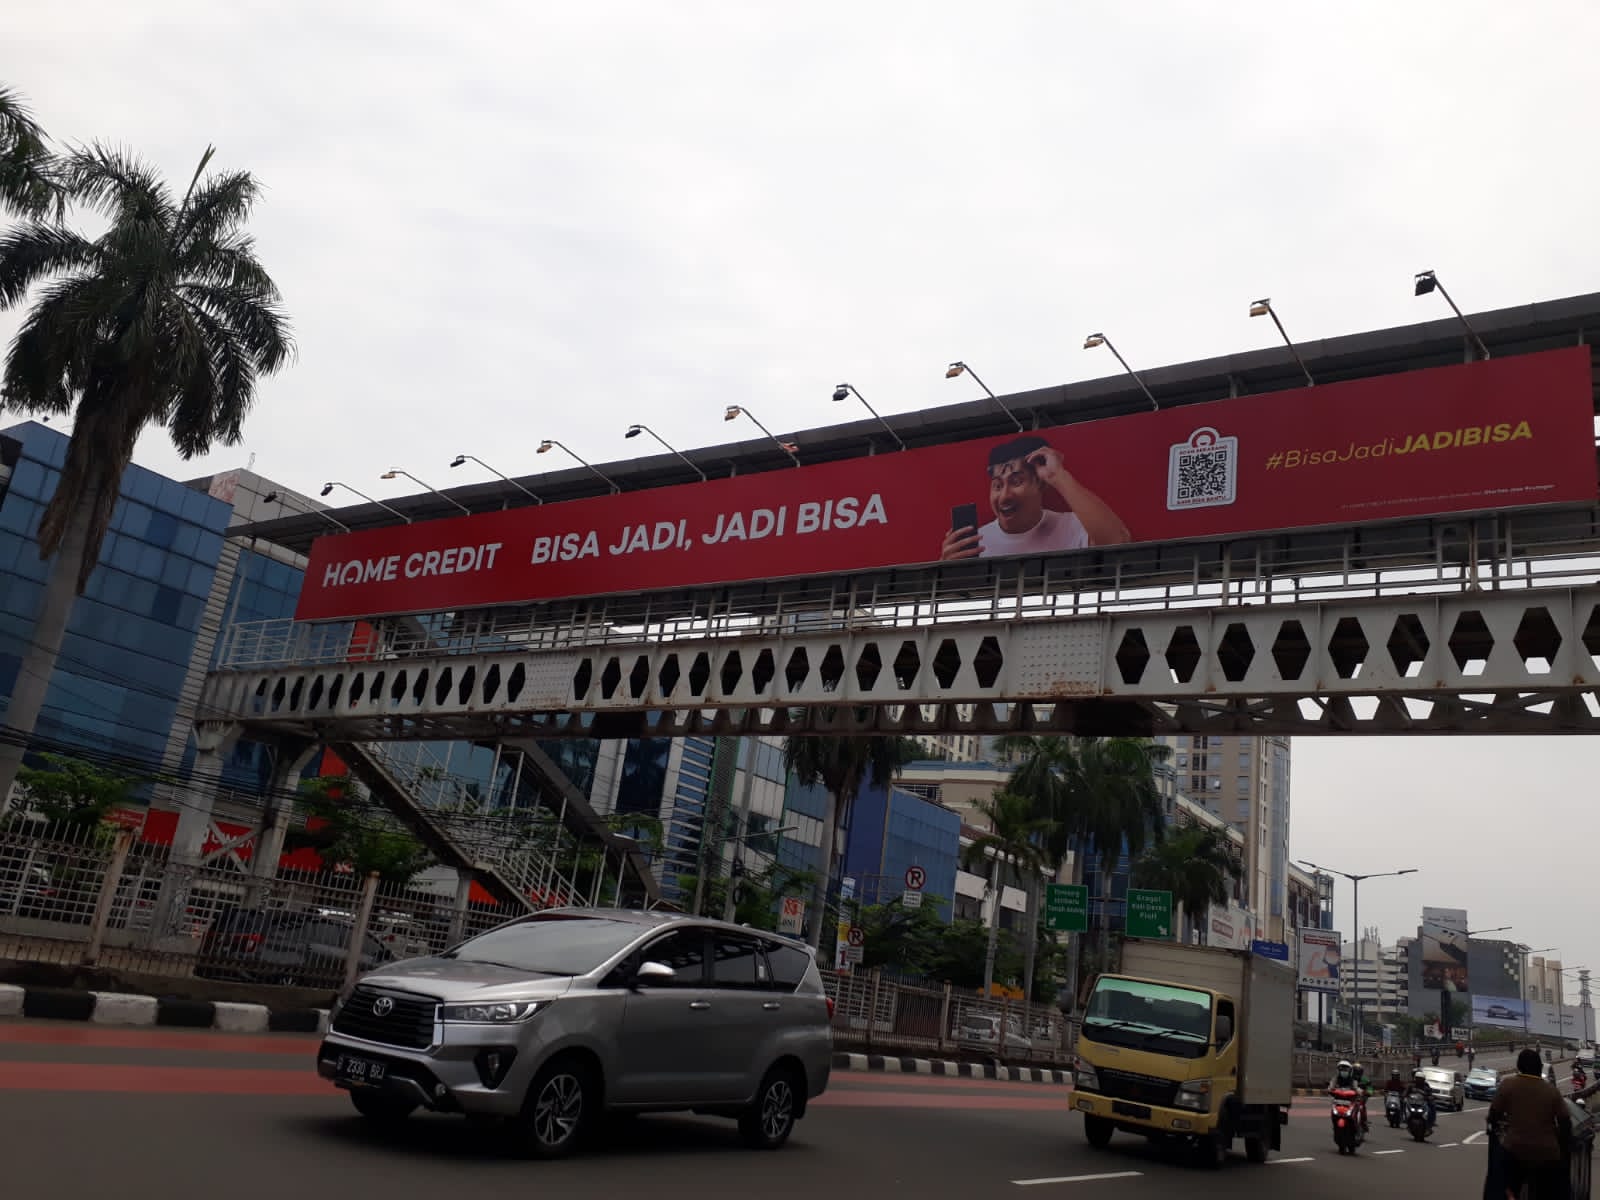 Walikota Jakarta Pusat Nilai Ada Yang Bermain Pasang Reklame Di JPO Hasyim Ashari Roxi